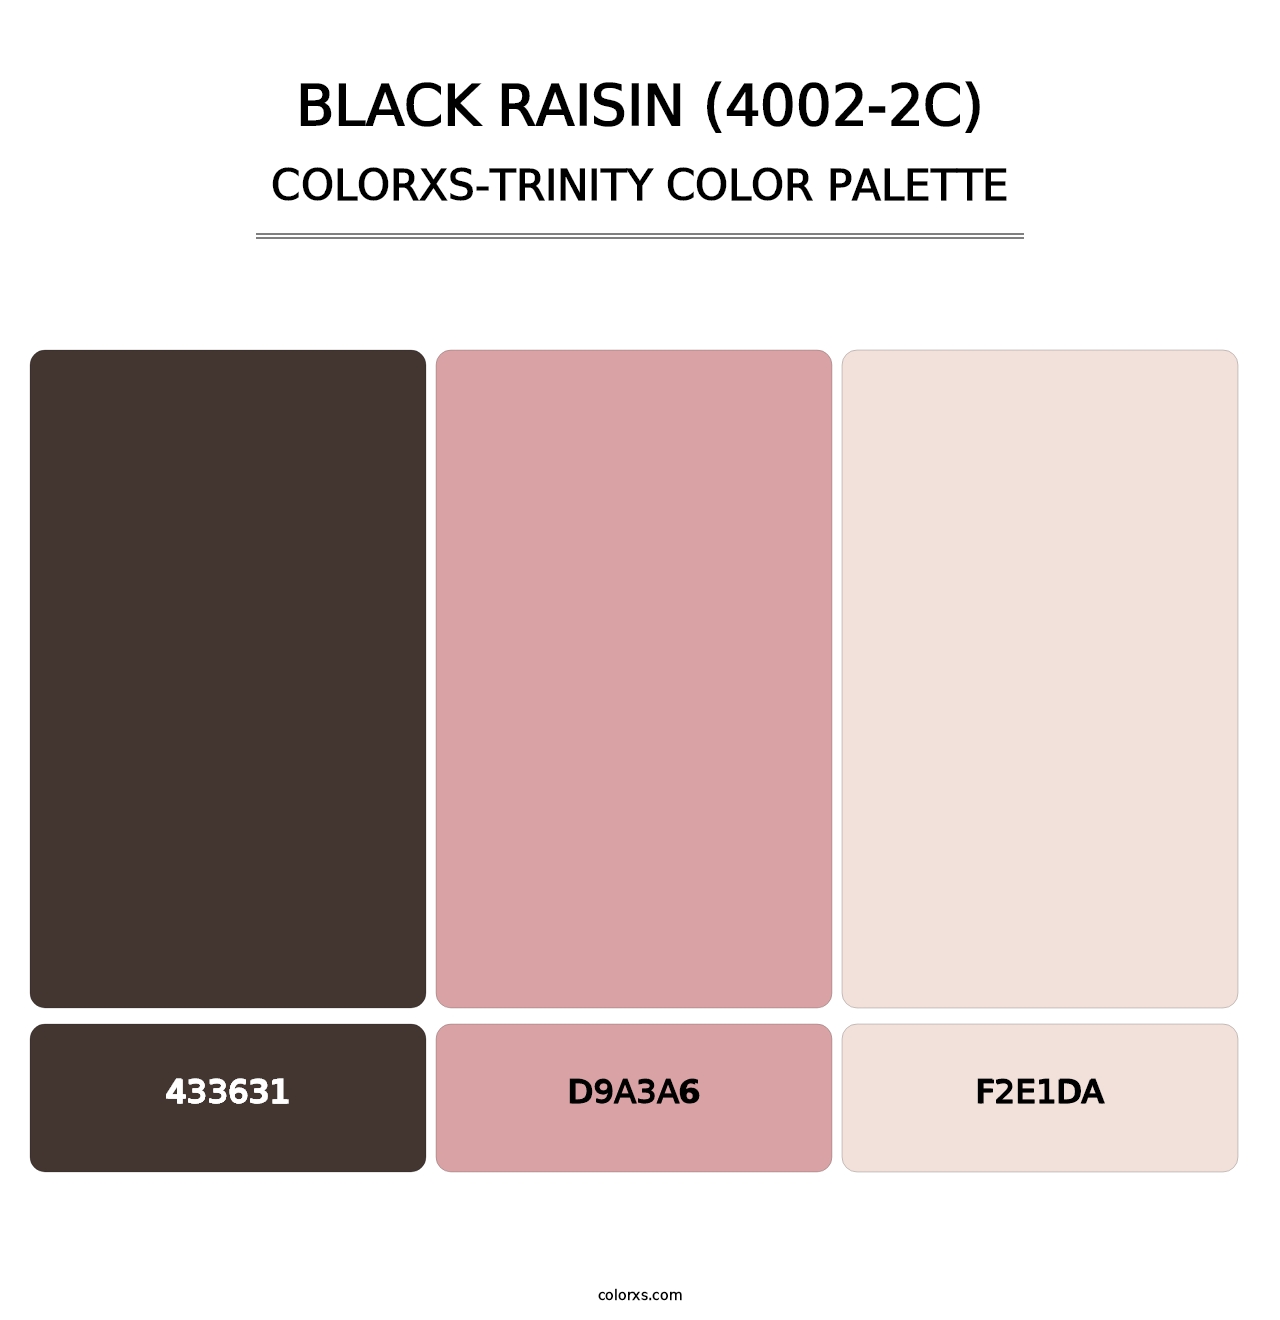 Black Raisin (4002-2C) - Colorxs Trinity Palette